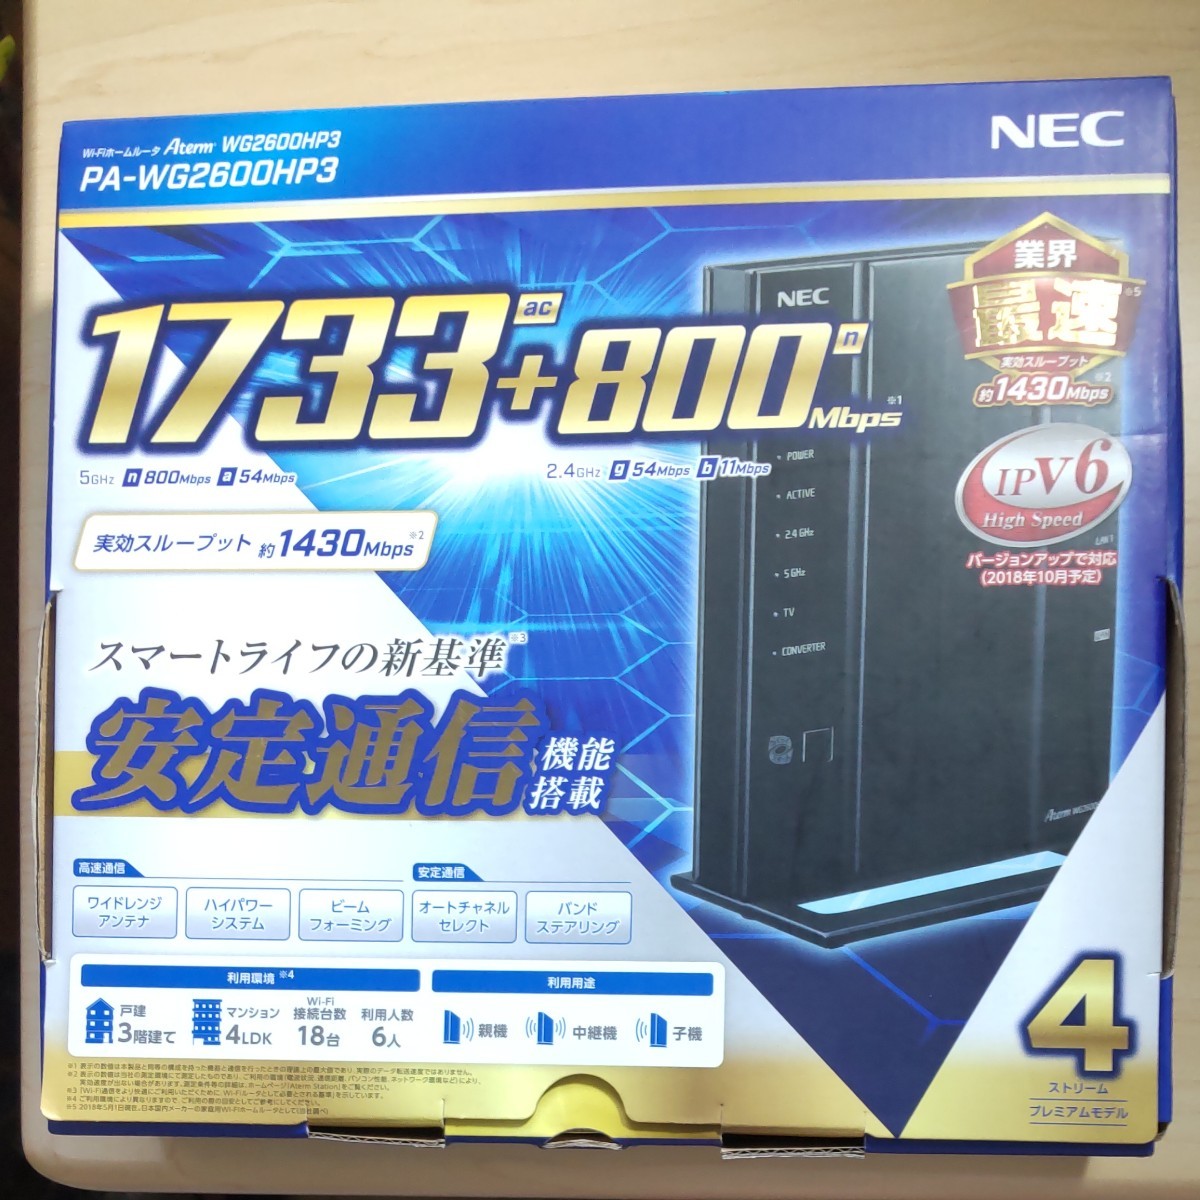 NEC Aterm PA-WG2600HP3 Wi-Fiルーター